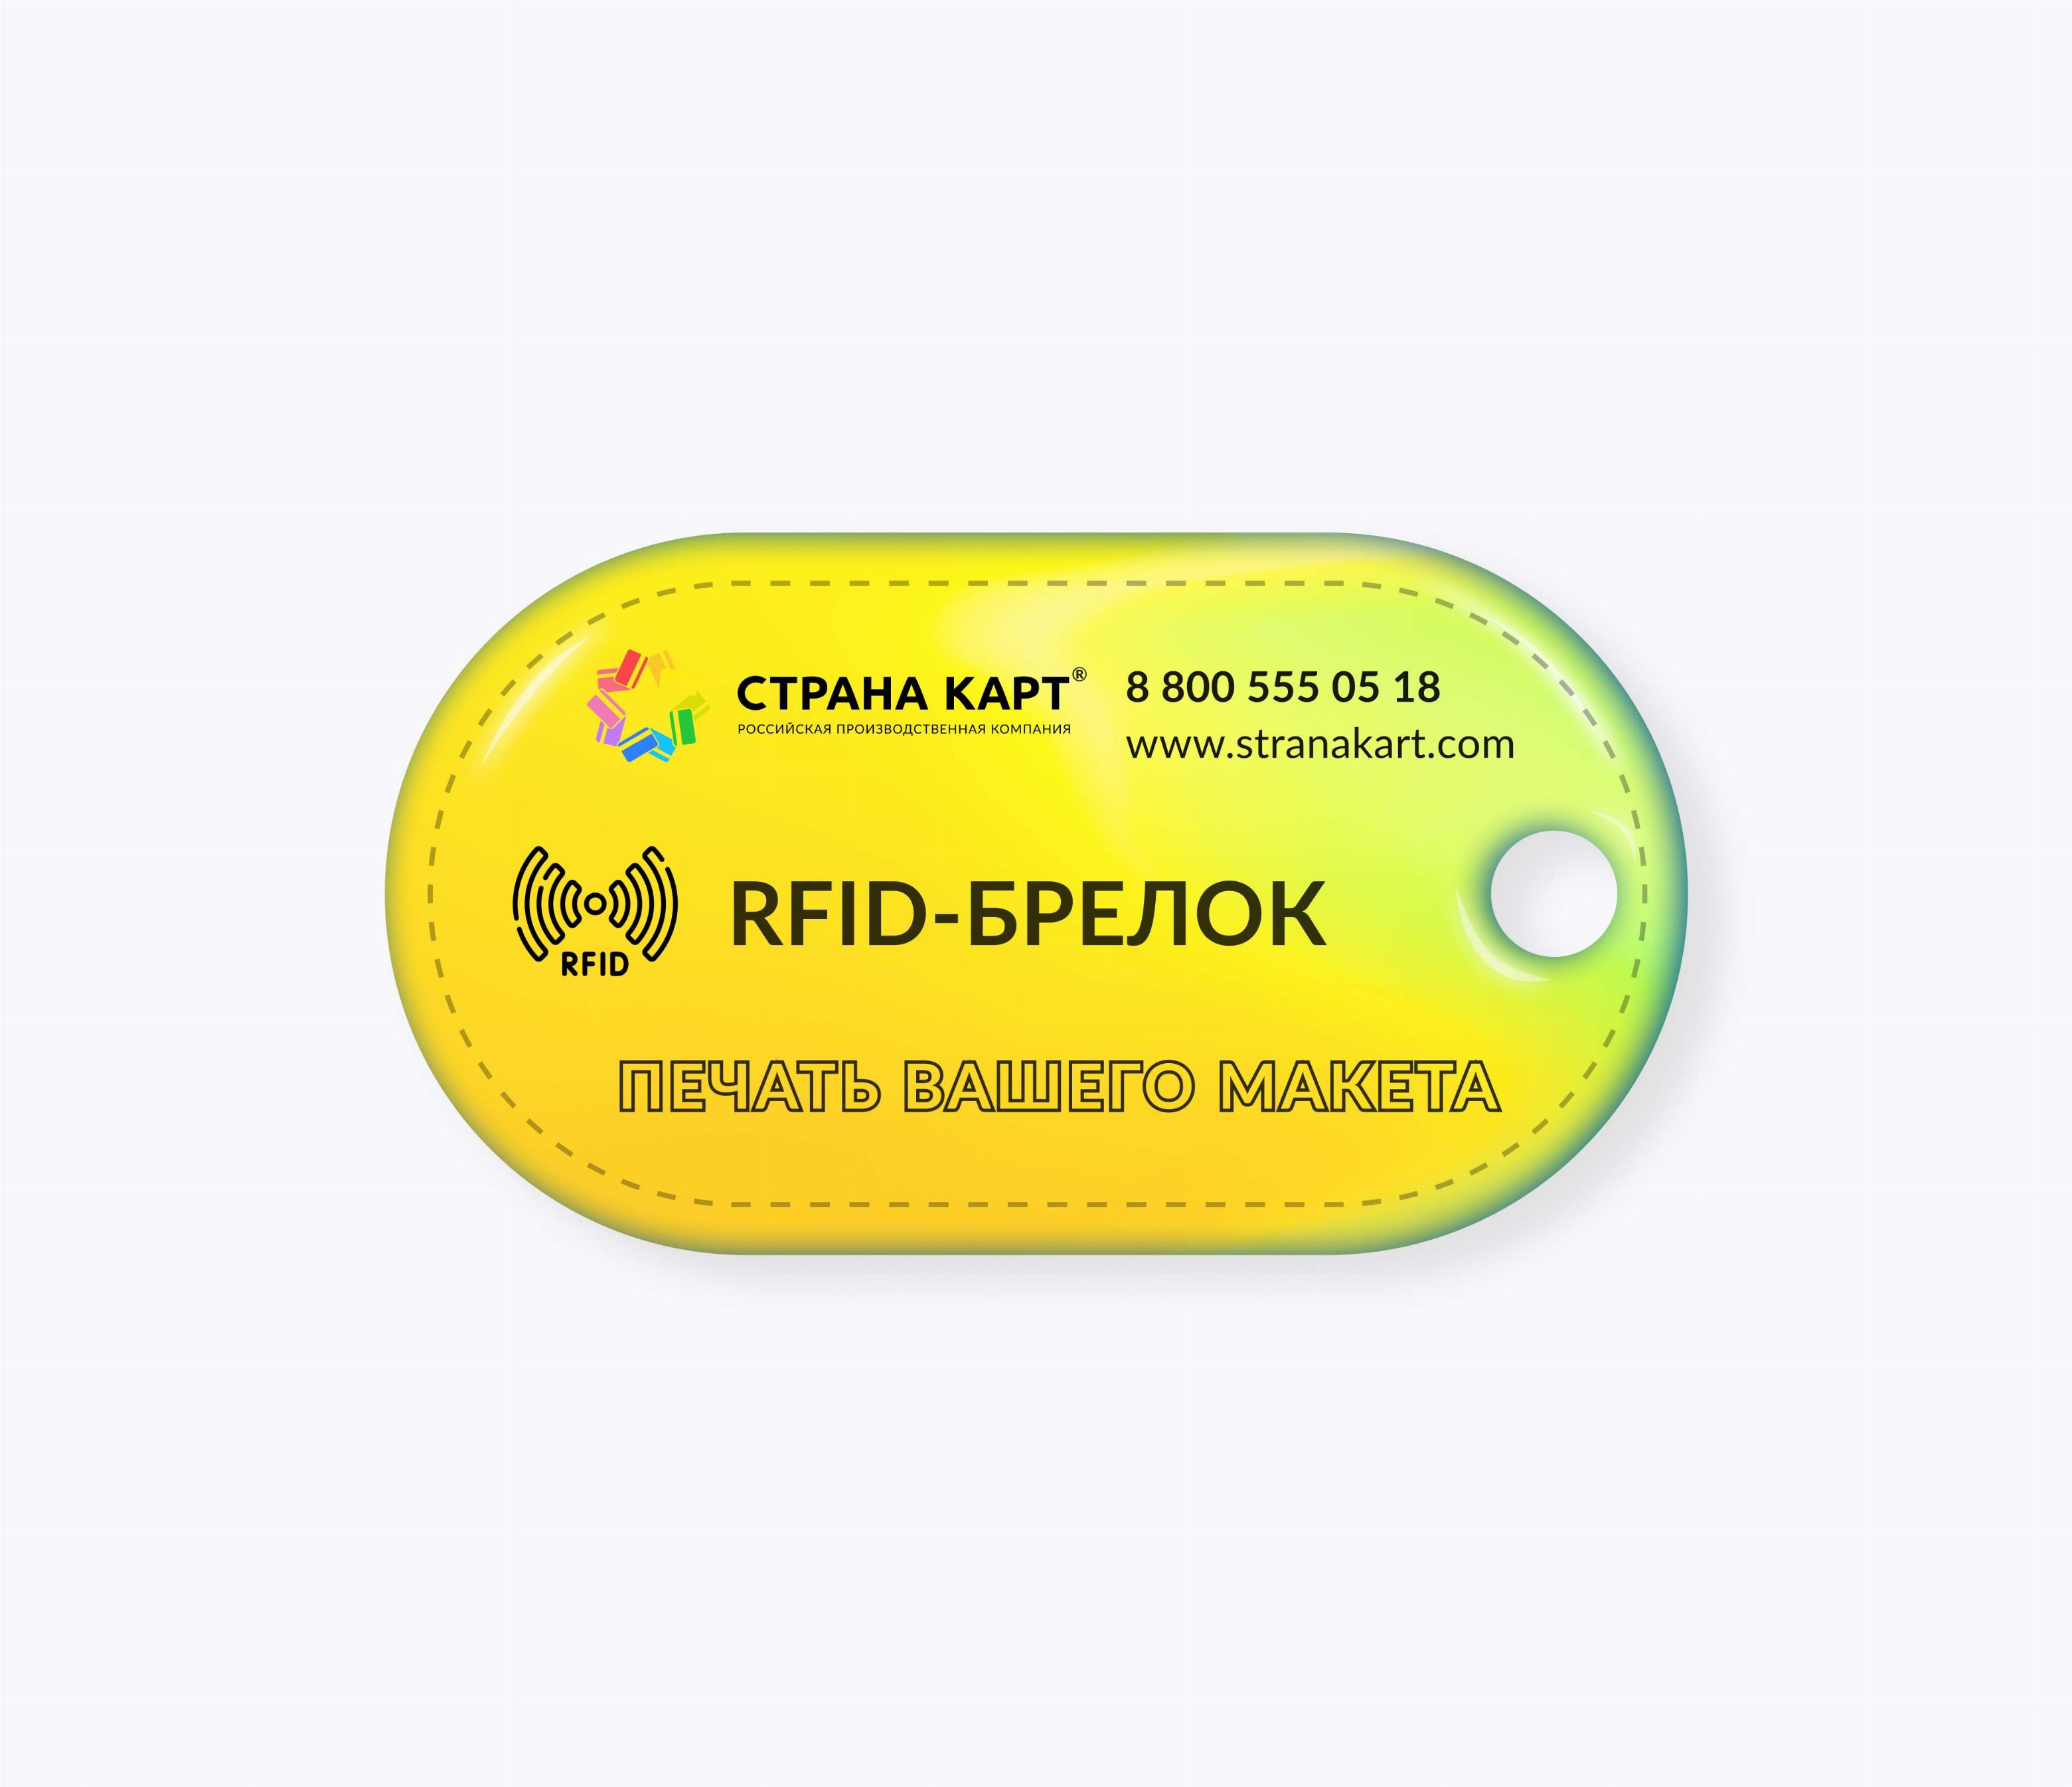 Овальные RFID-брелоки NEOKEY® с чипом NXP MIFARE Plus X 2k 7 byte UID RFID-брелоки NEOKEY® с чипом NXP MIFARE Plus X 2k 7 byte UID и вашим логотипом